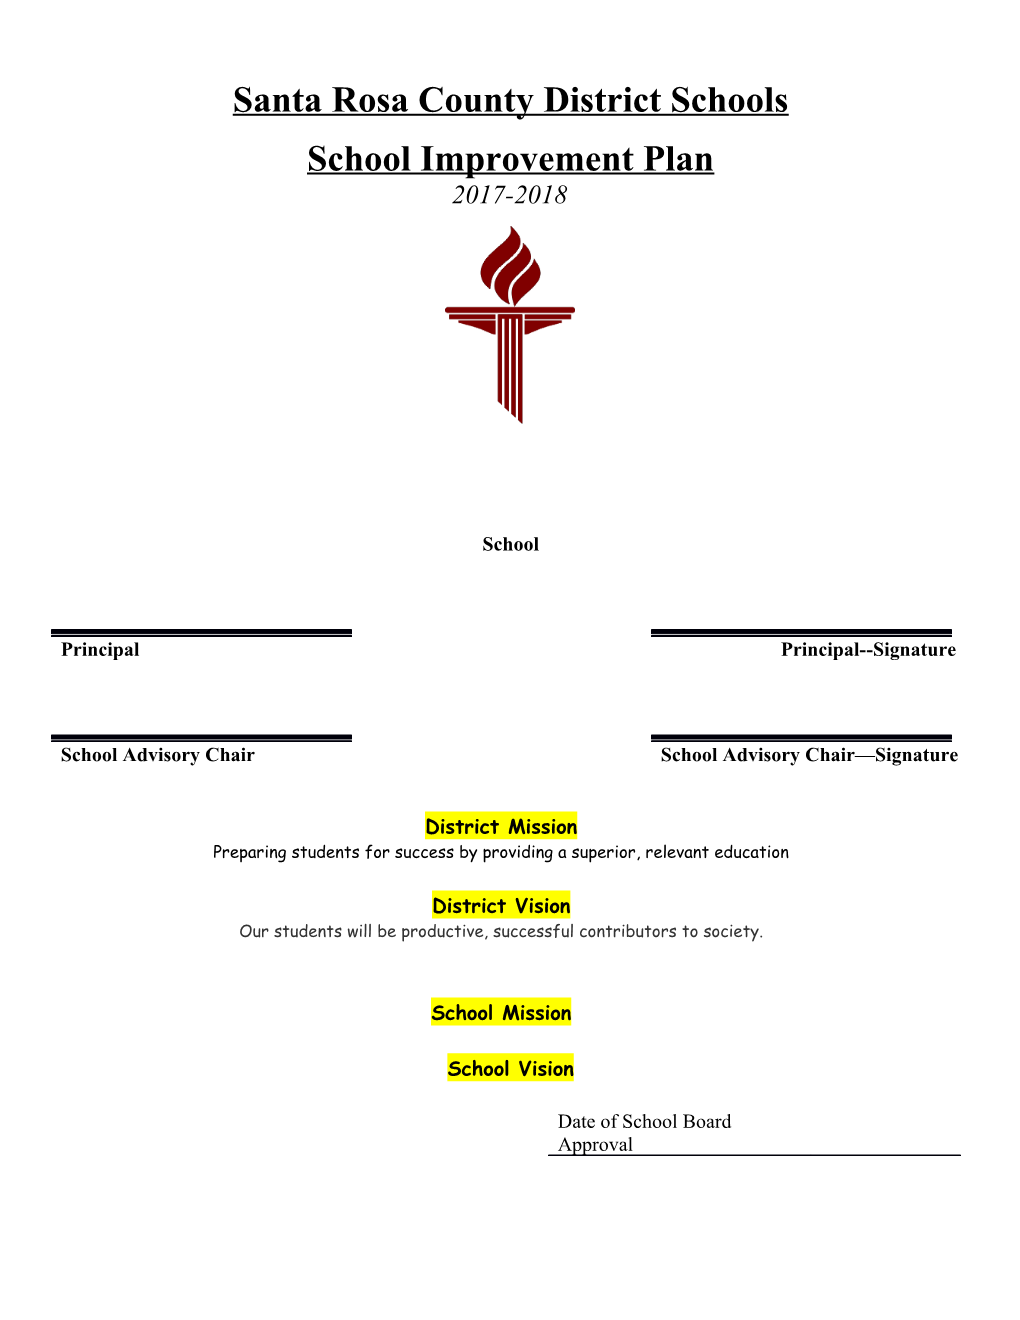 17-18 School Improvement Plan All